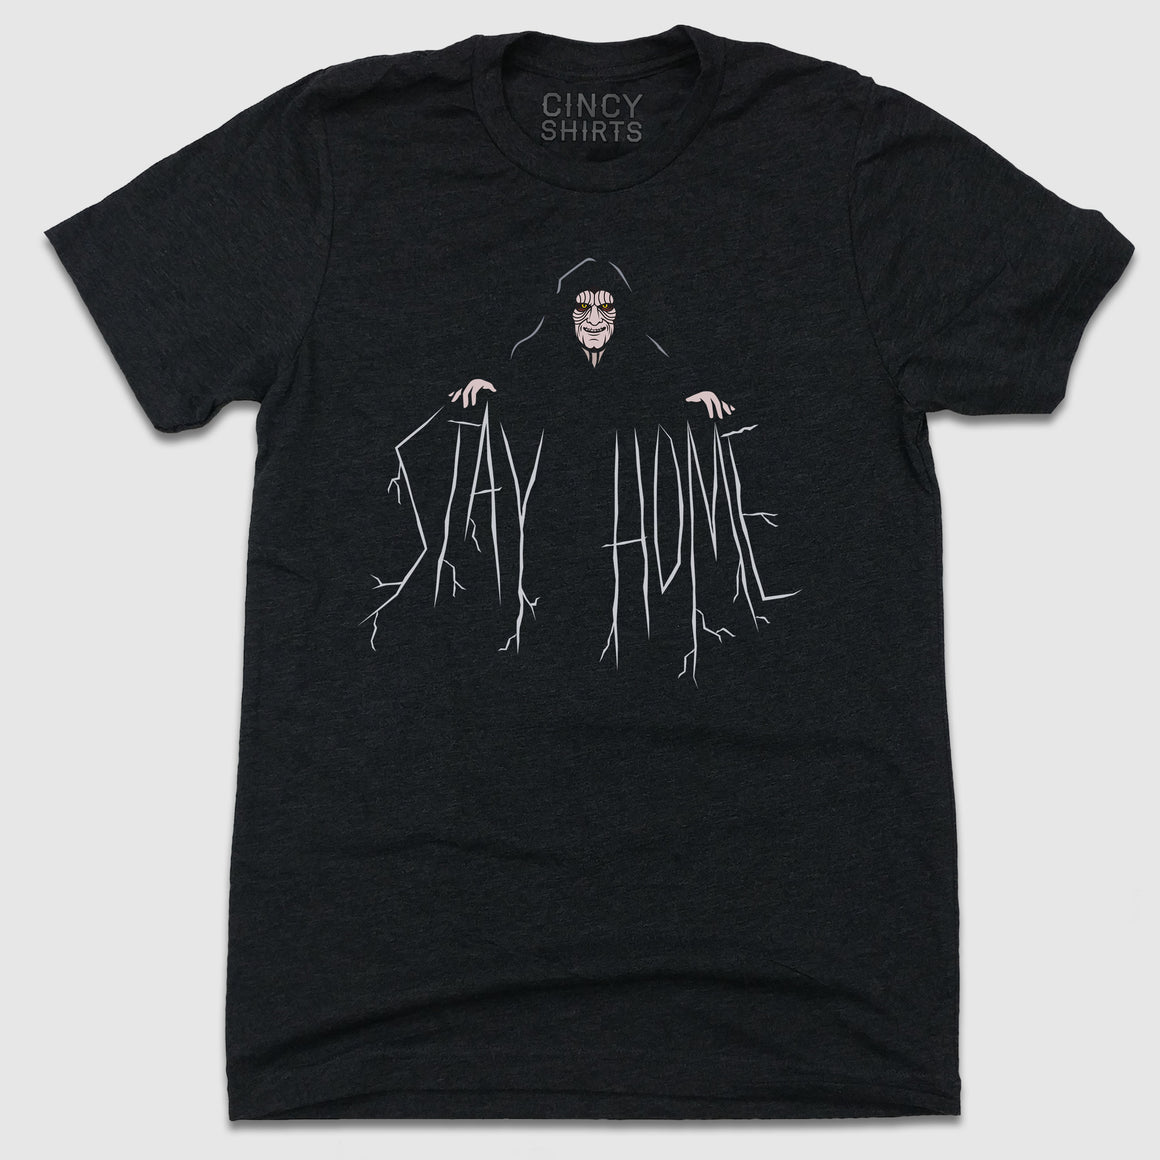 Stay Home - Emperor Tee - Cincy Shirts